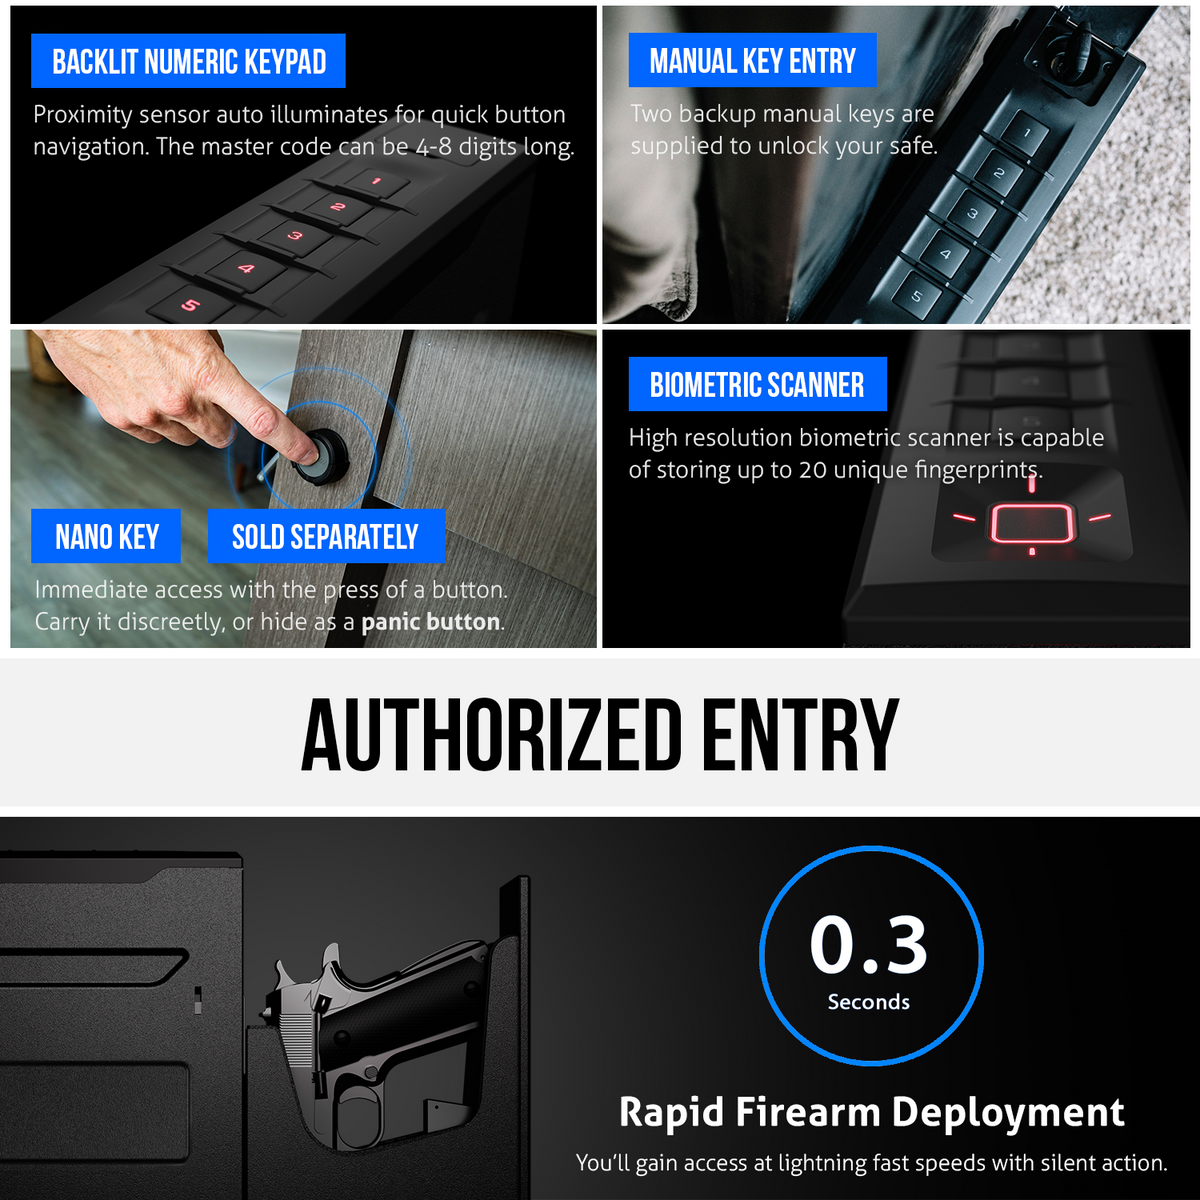 Vaultek - NSL20i Quick Access Biometric and WiFi Slider Gun Safe